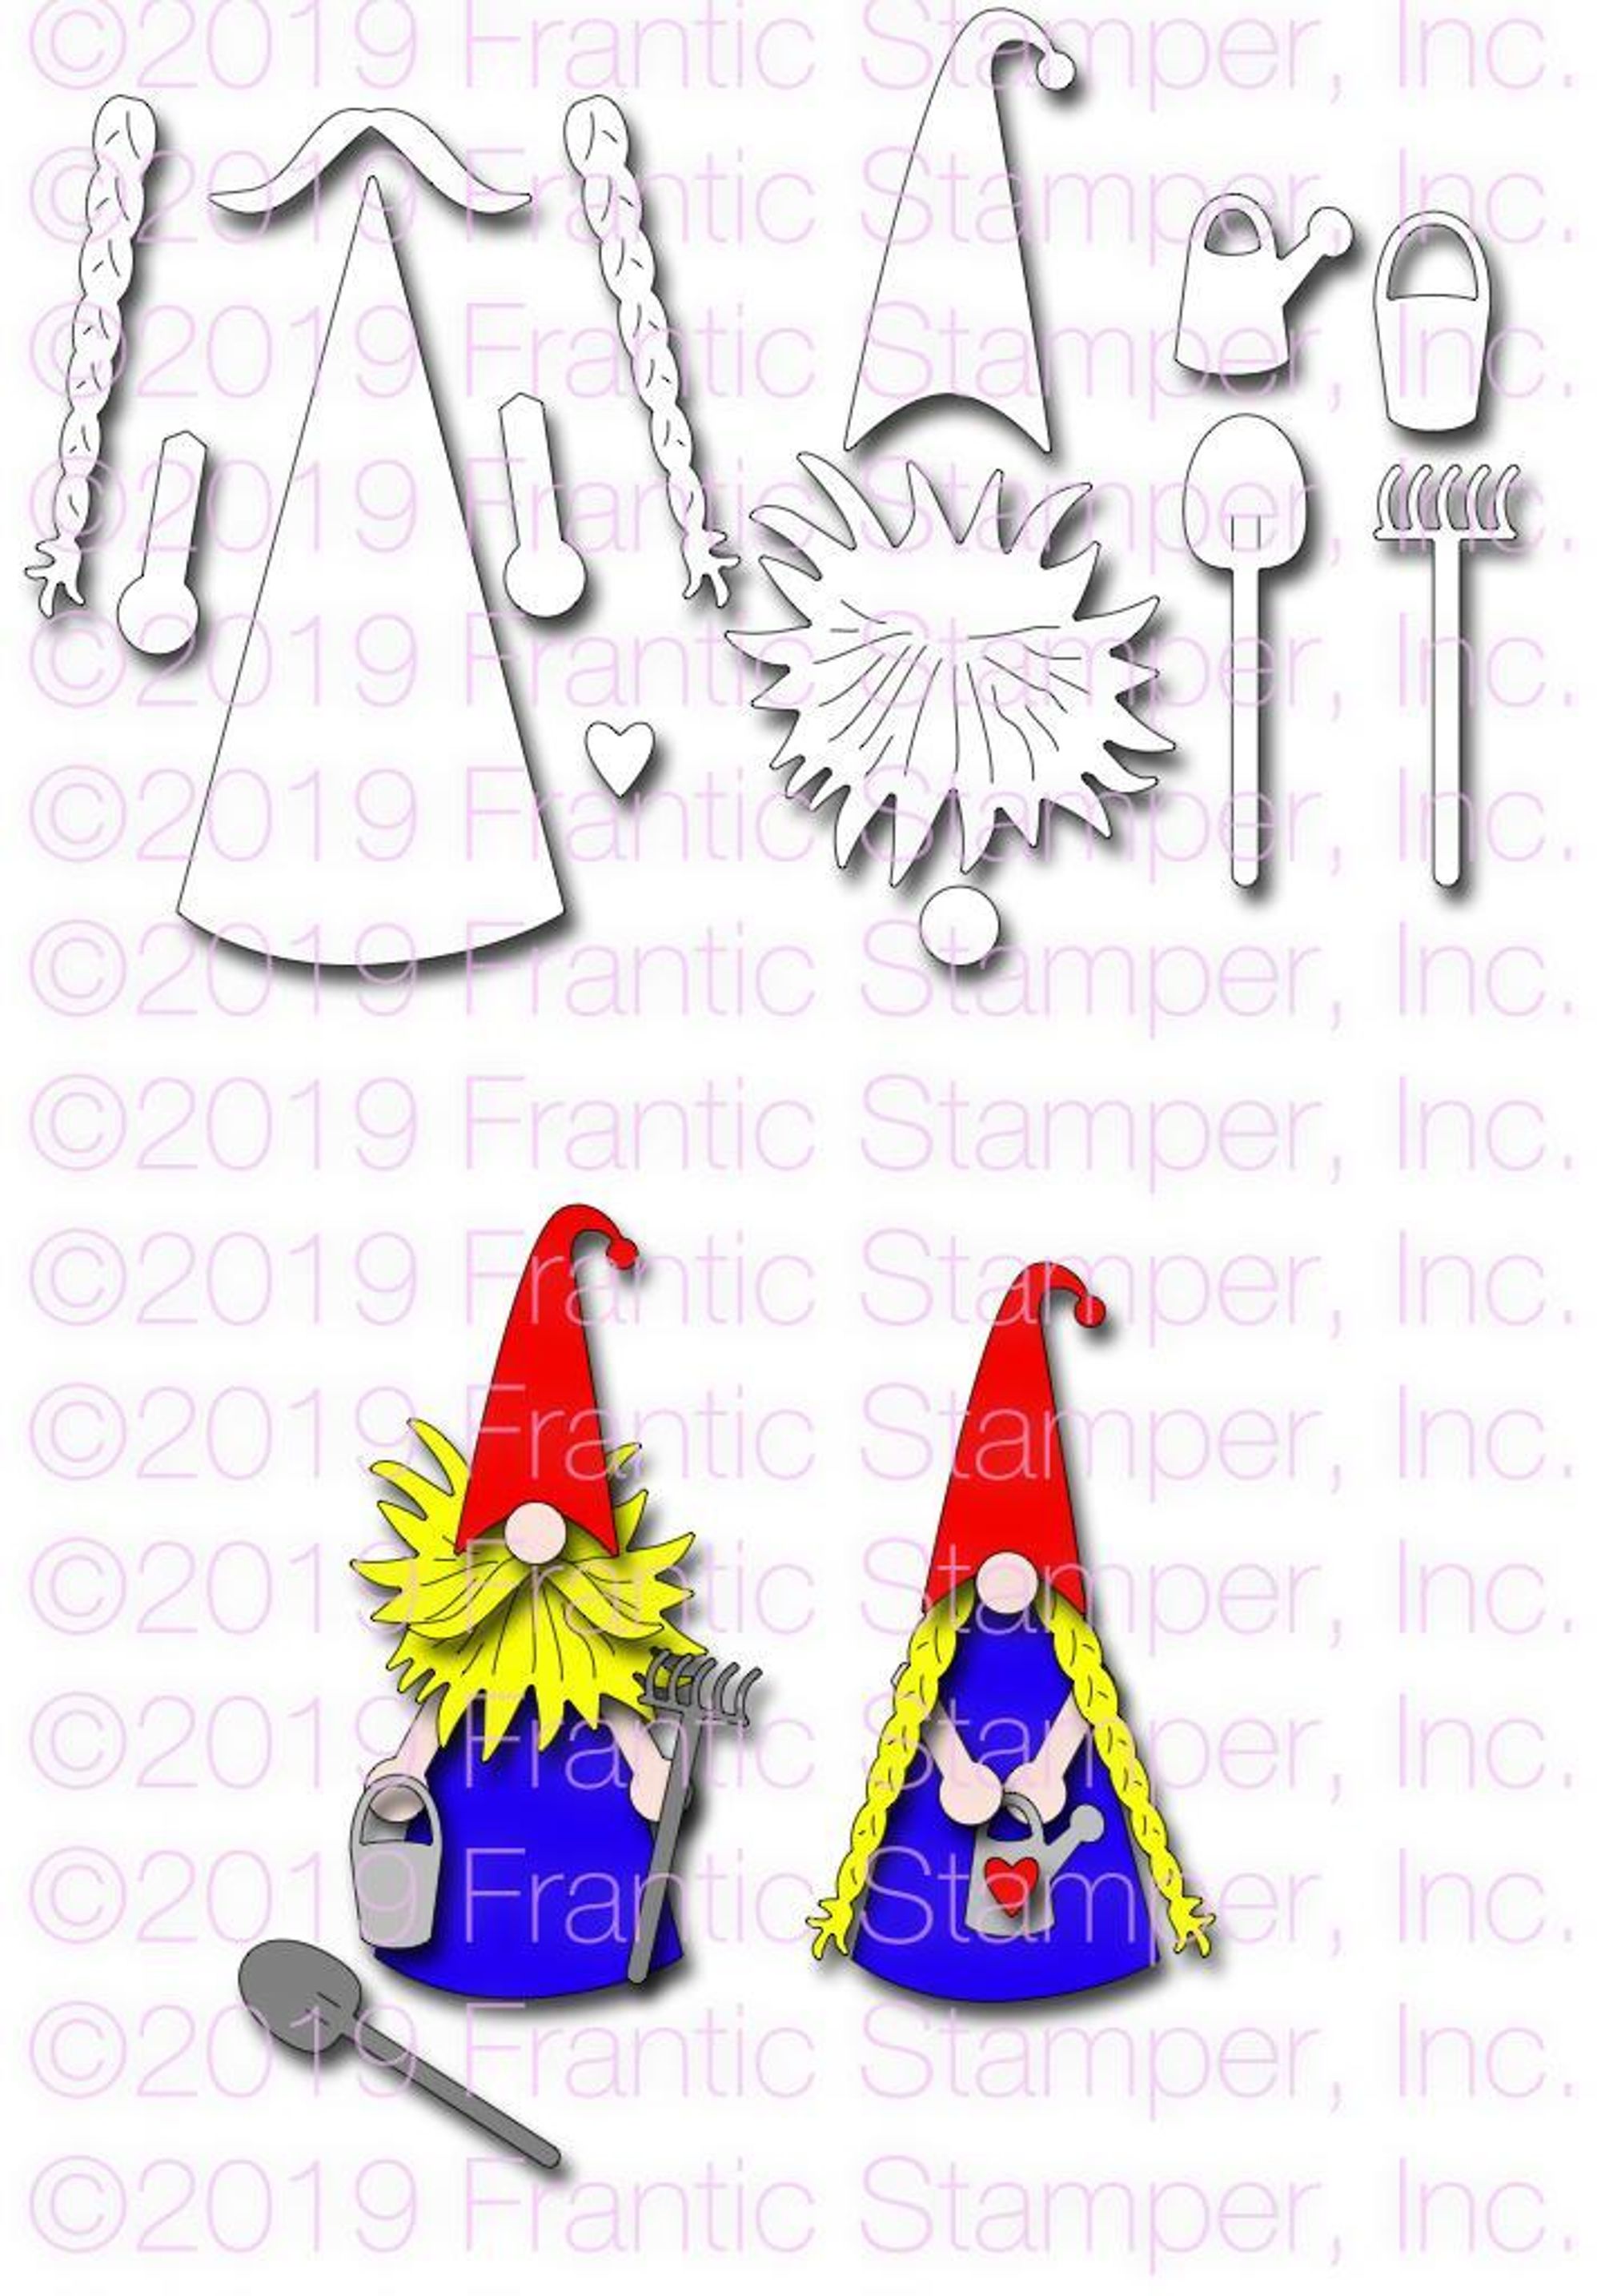 Frantic Stamper Precision Die - Folksy Gnome